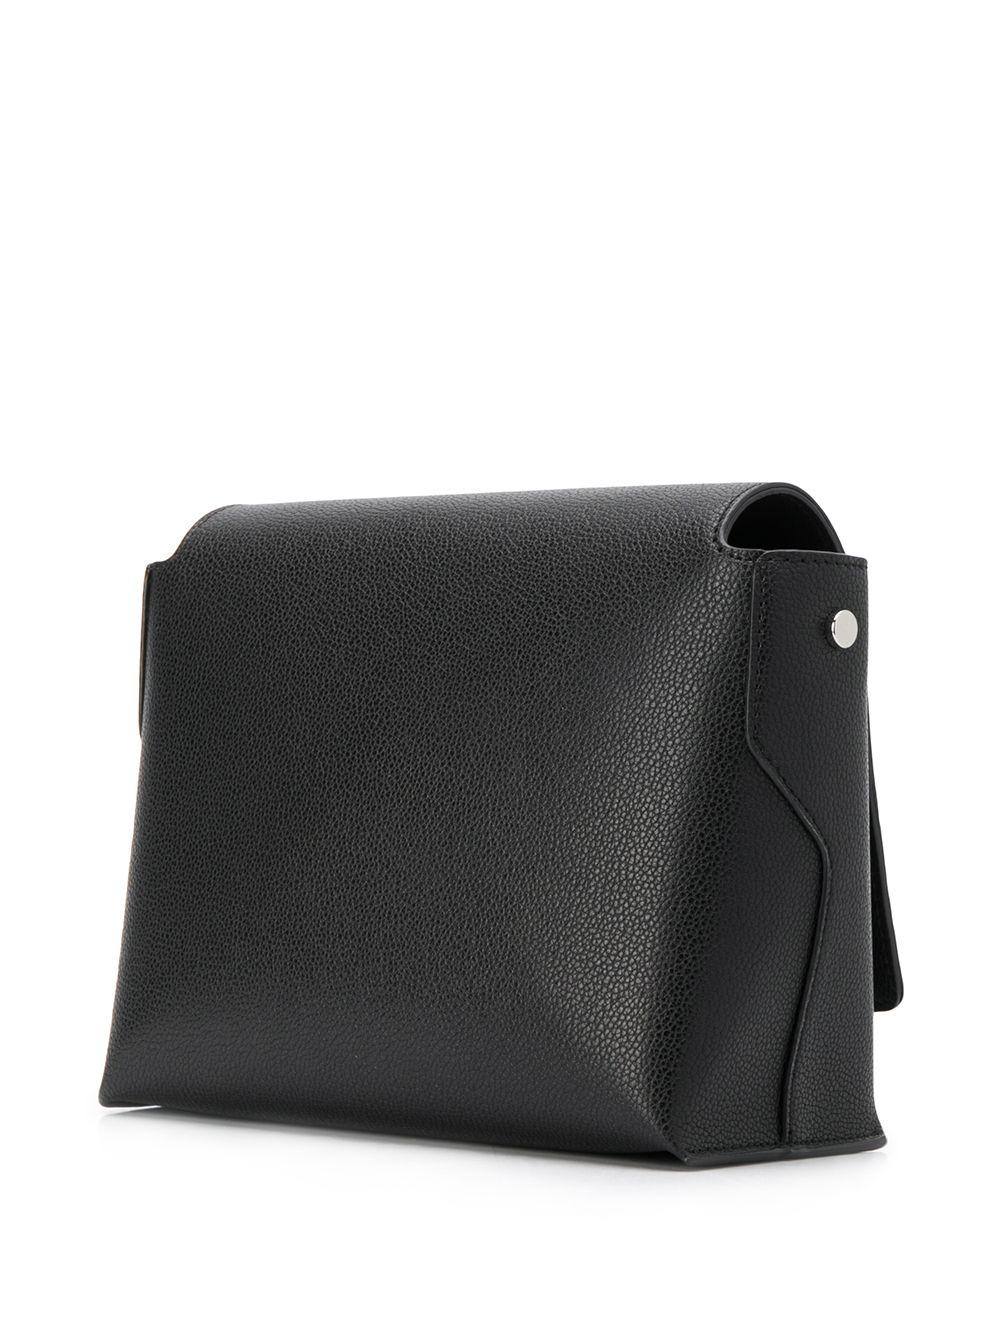 Emporio Armani Crossbody Bag in Black - Lyst